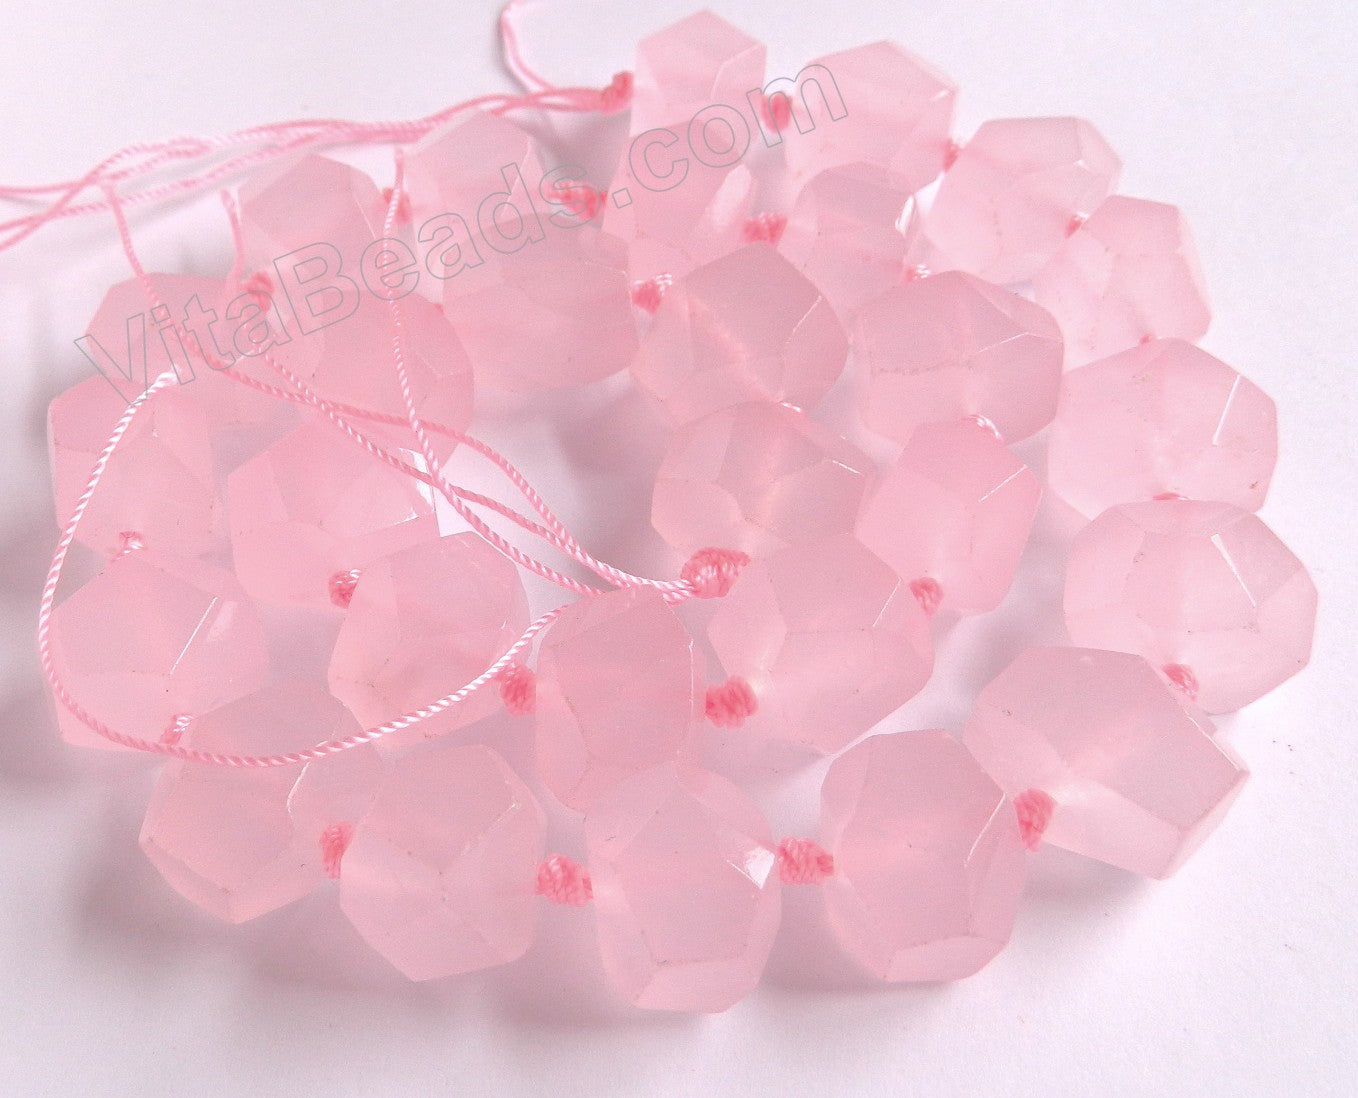 Light Rose Pink Jade  -  Machine Cut Center Drilled Nuggets 16"    13 x 16 x 12 mm